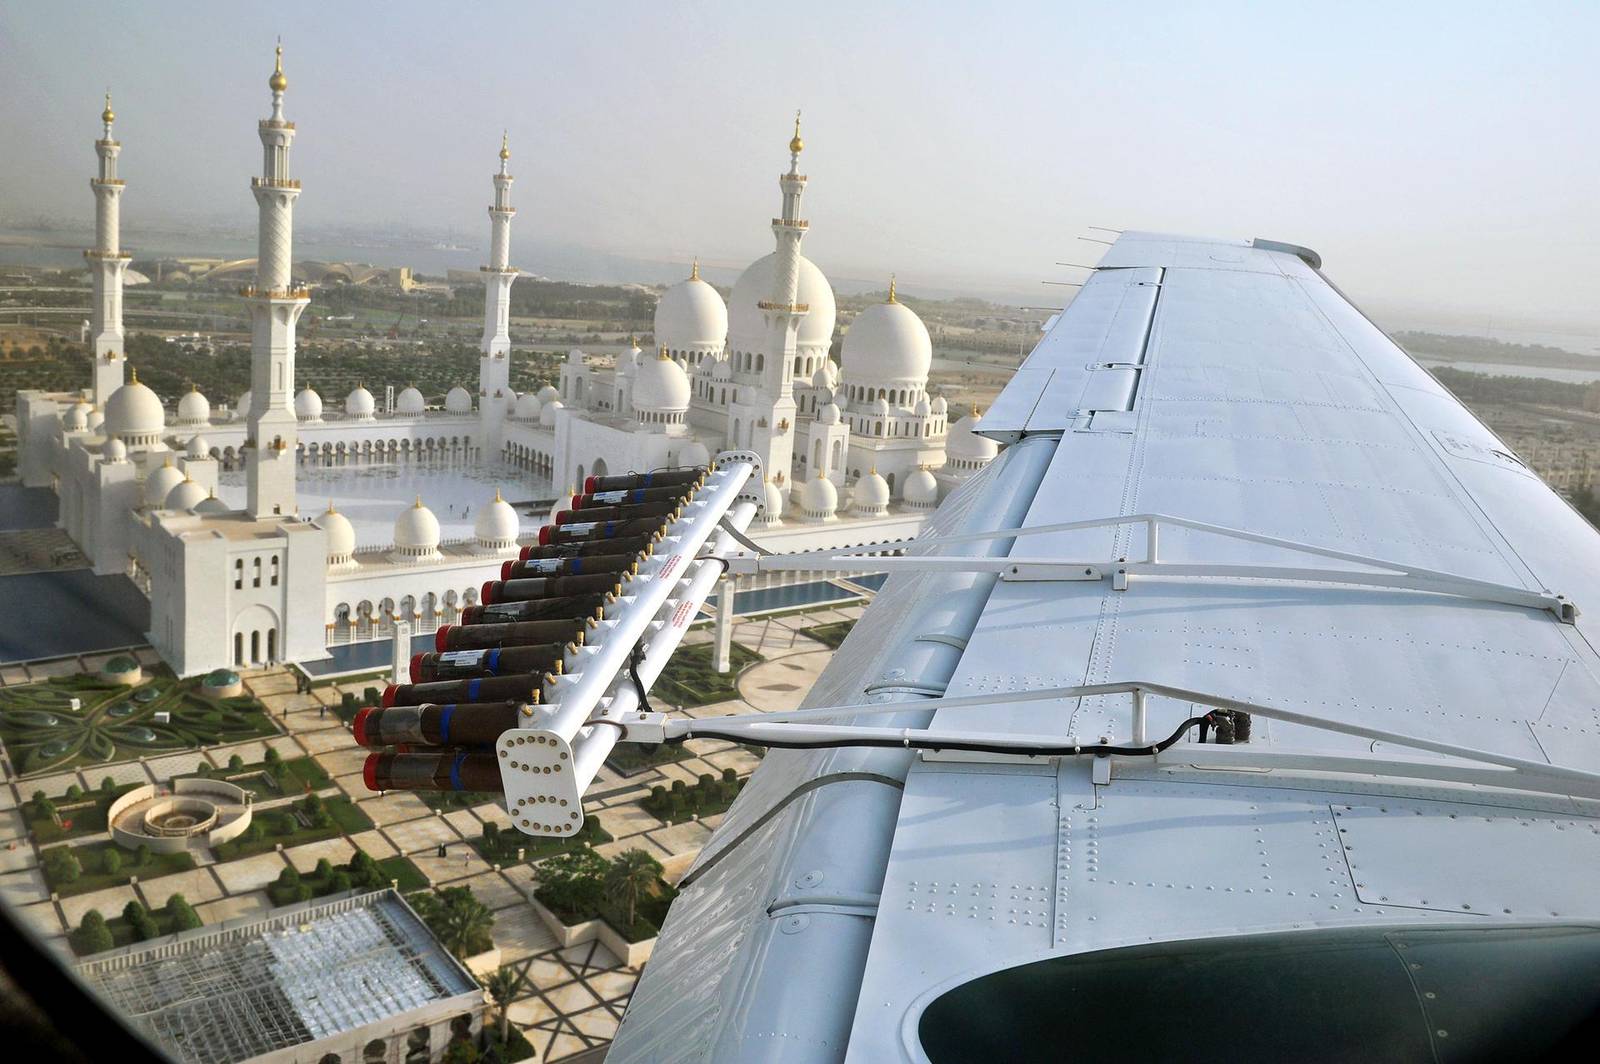 Cloud seeding in Dubai, Abu Dhabi and rest of UAE how does it work?